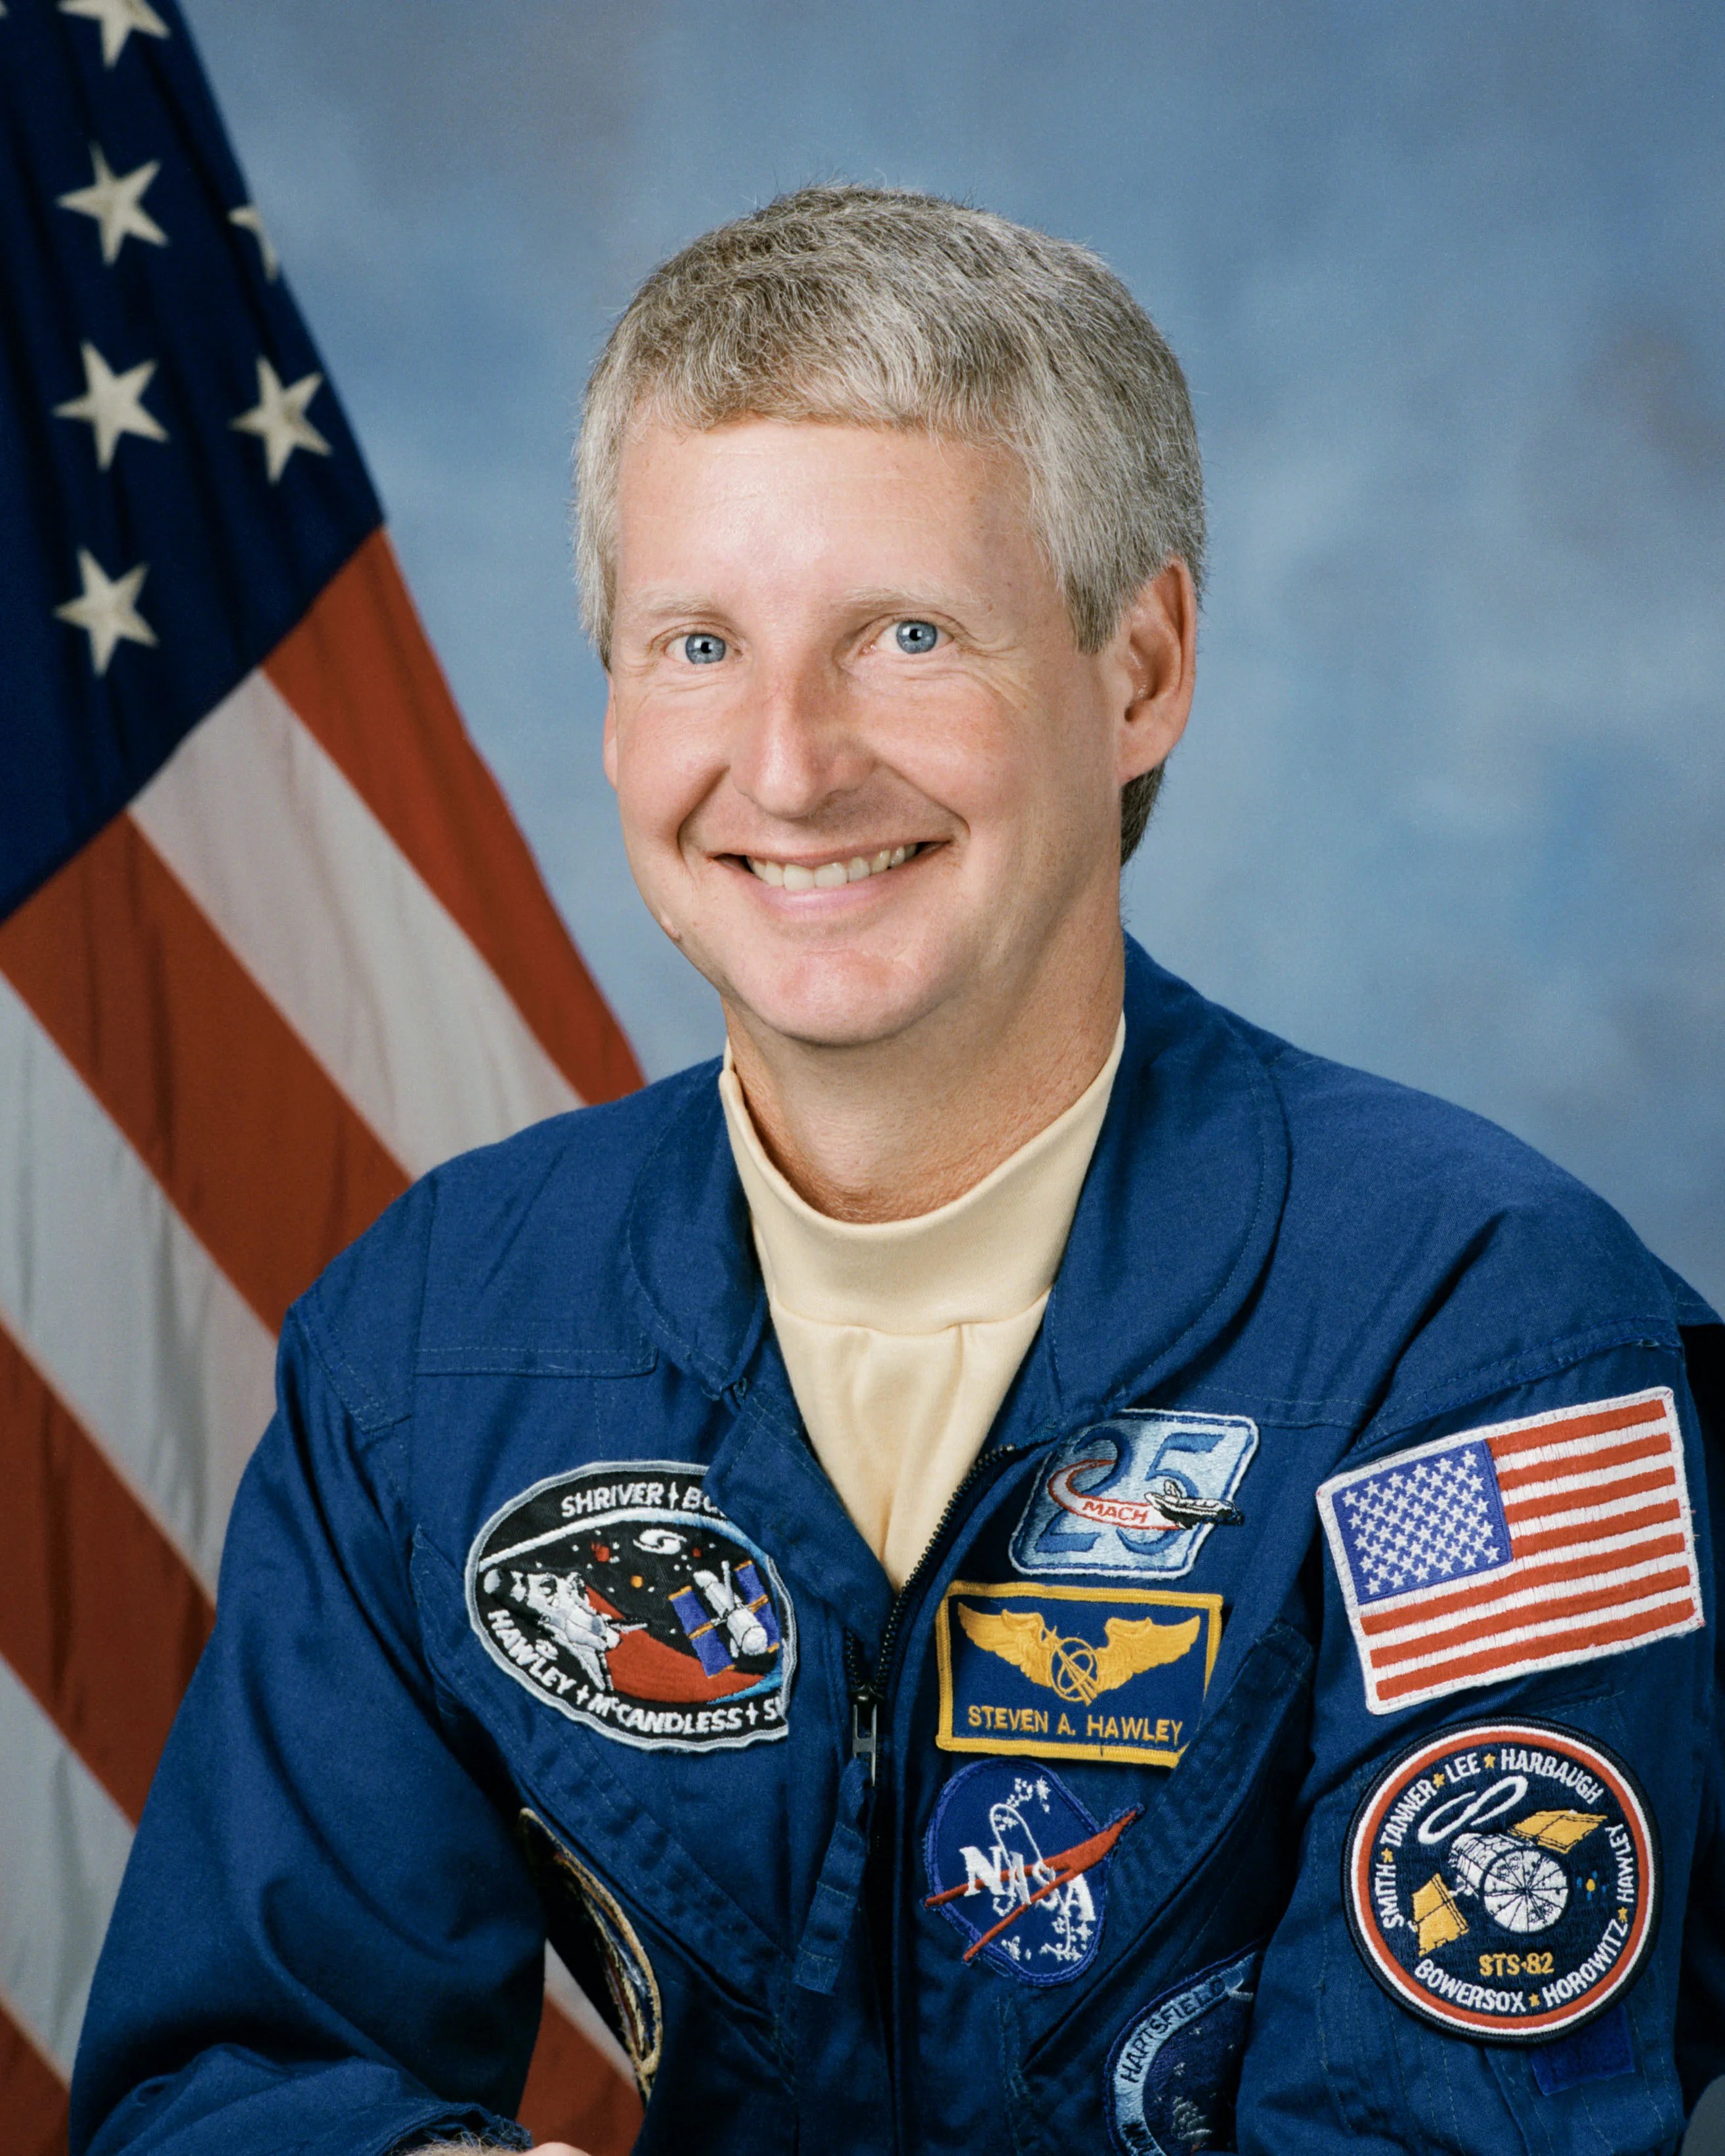 Official astronaut portrait of Steven Hawley.